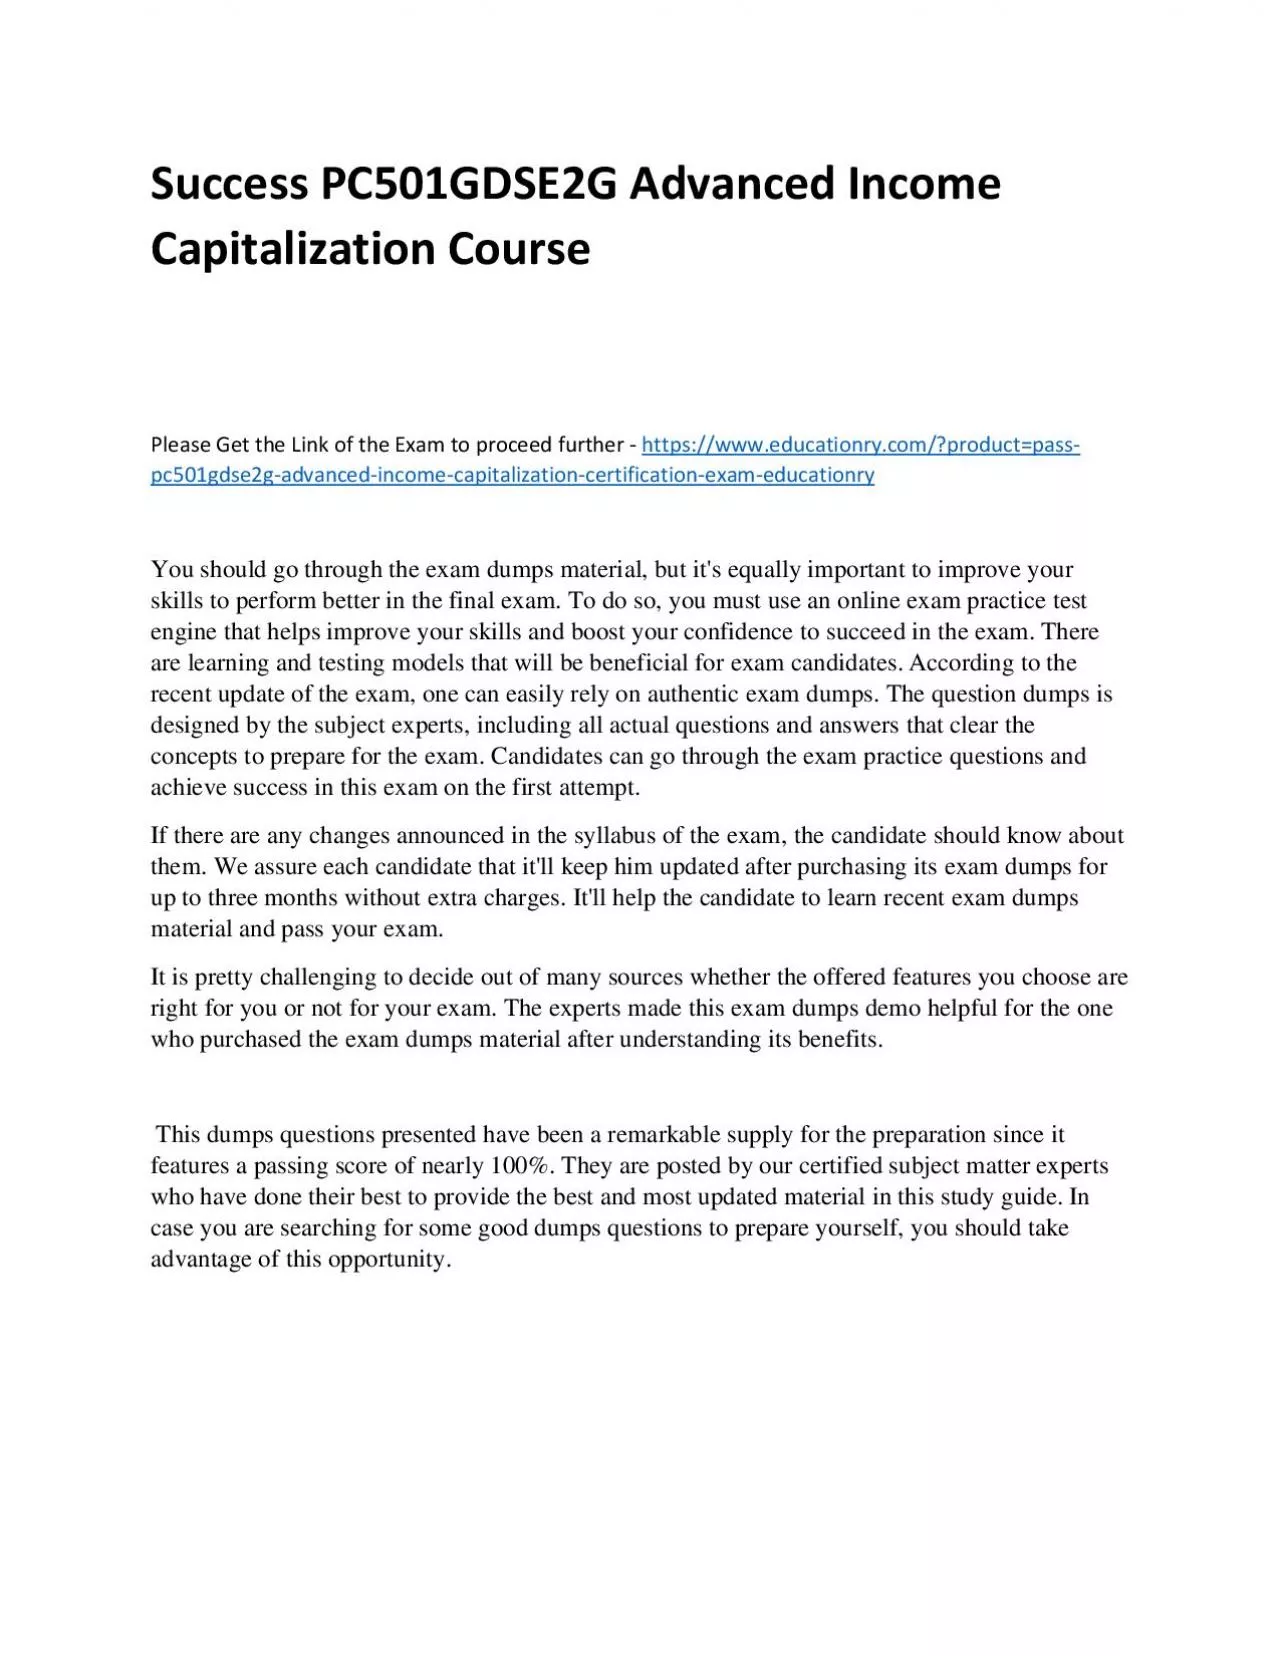 Success PC501GDSE2G Advanced Income Capitalization Practice Course